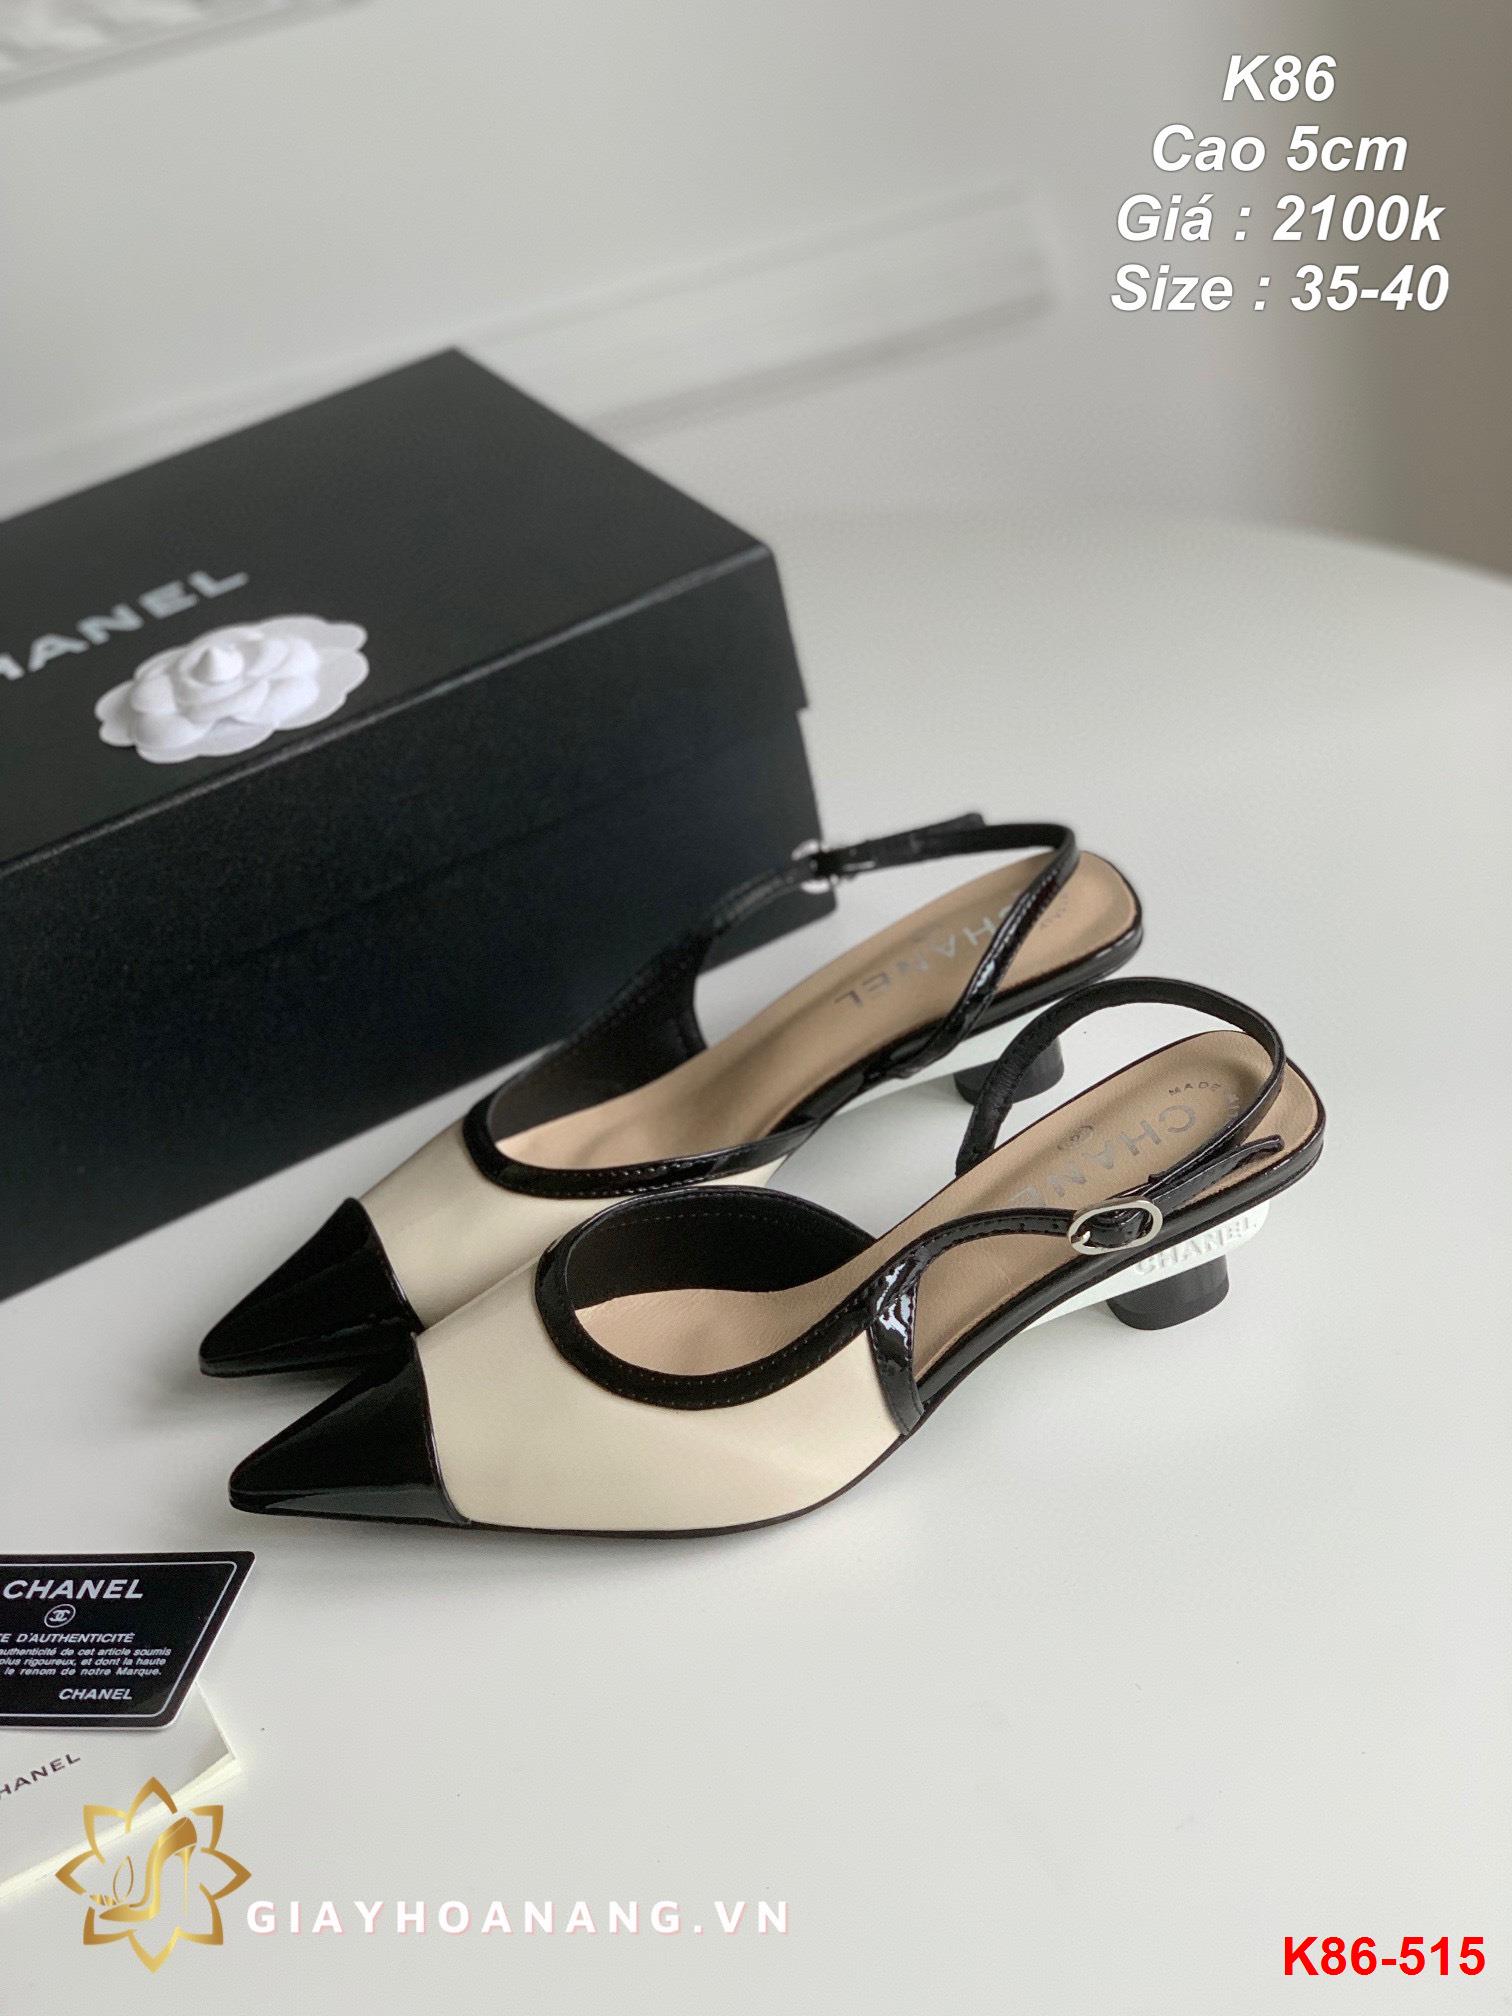 K86-515 Chanel sandal cao 5cm siêu cấp